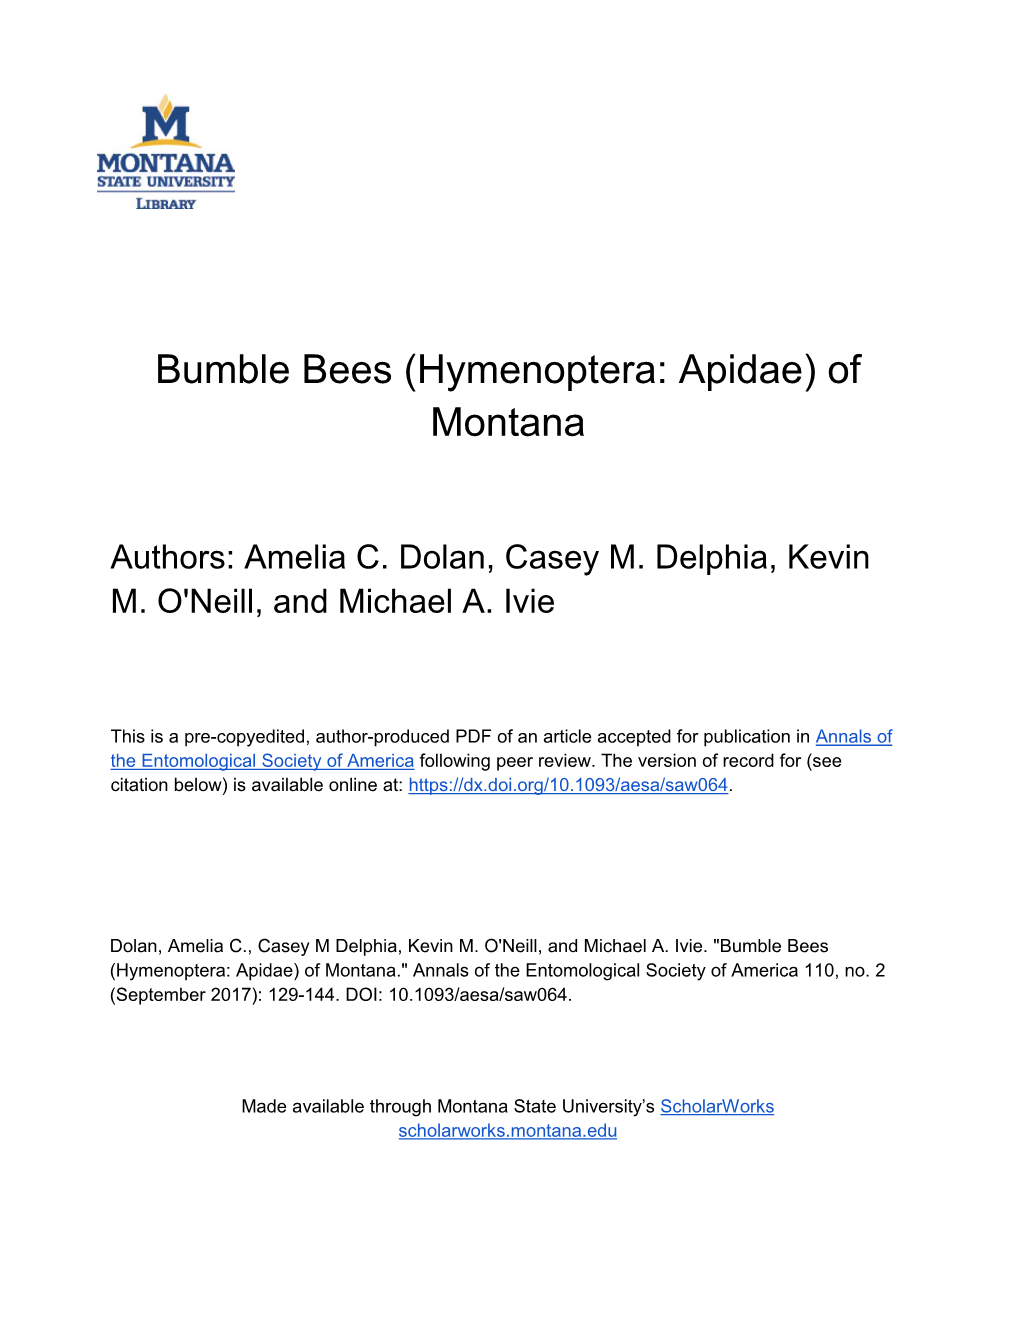 Bumble Bees (Hymenoptera: Apidae) of Montana (PDF)